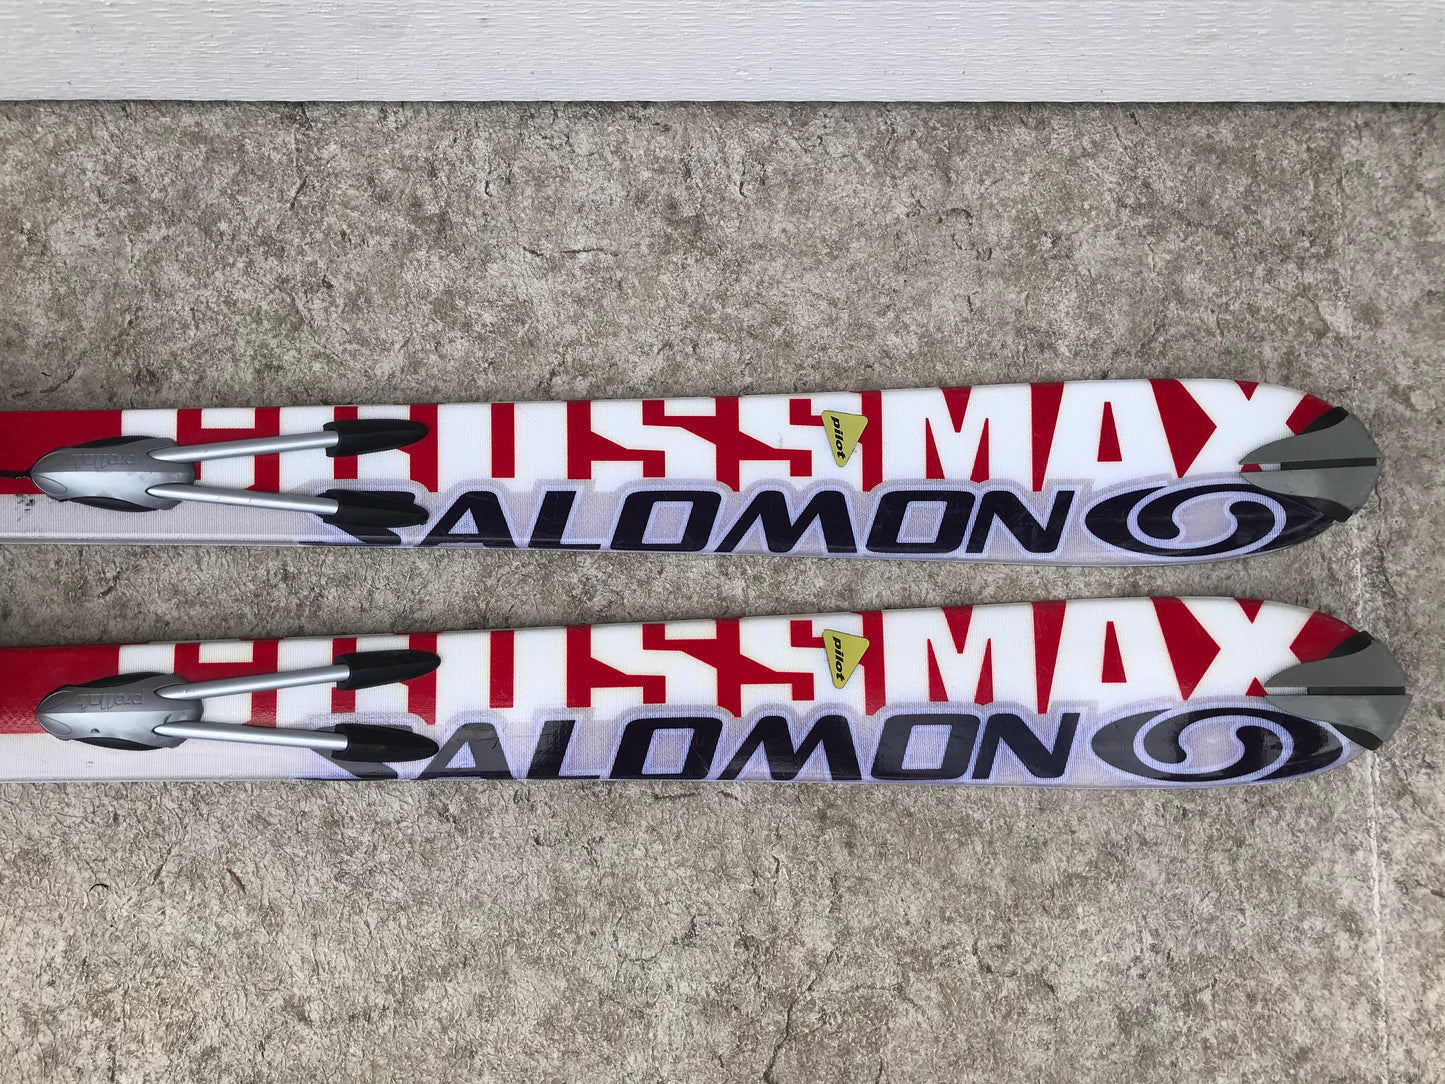 Ski 180 Salomon CrossMax Parabolic Red Grey Black With Bindings